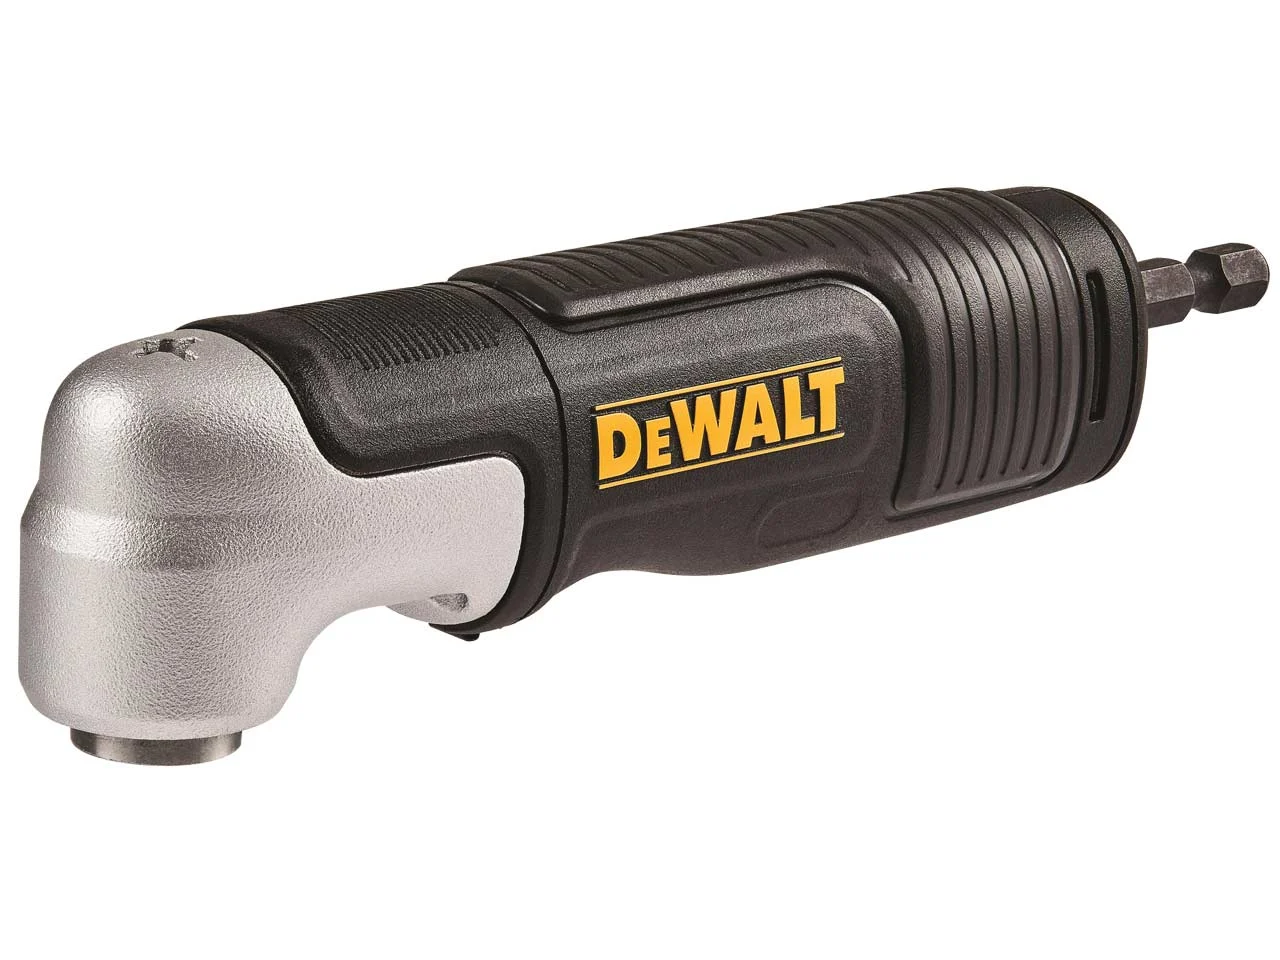 DEWALT DeWalt DT20500-QZ 1/4In Hex Impact Modular Right-Angle Attachment